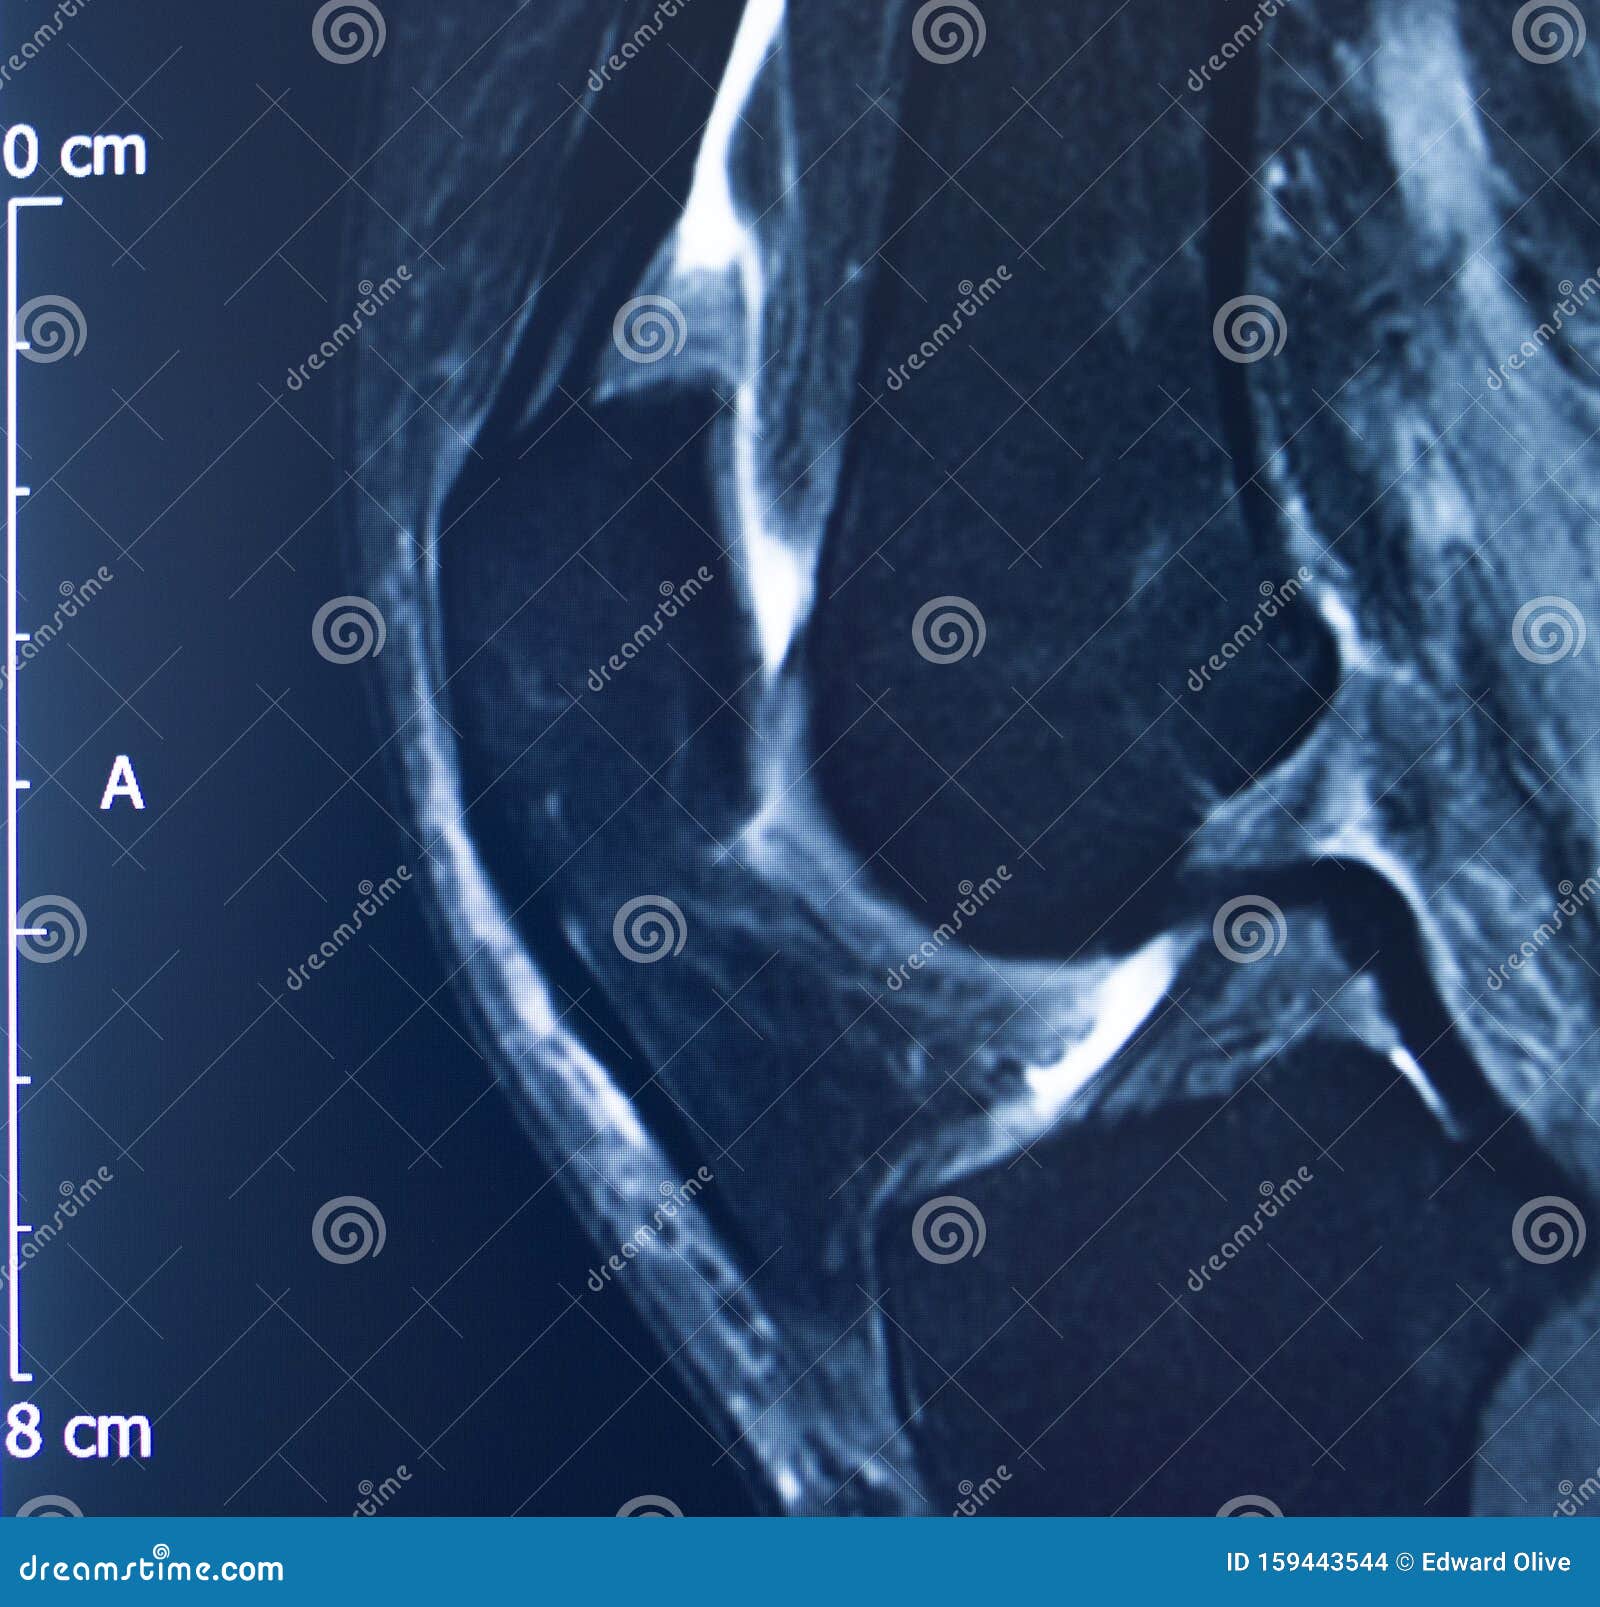 Knee injury mri mcl tear stock photo. Image of anatomy - 159443544